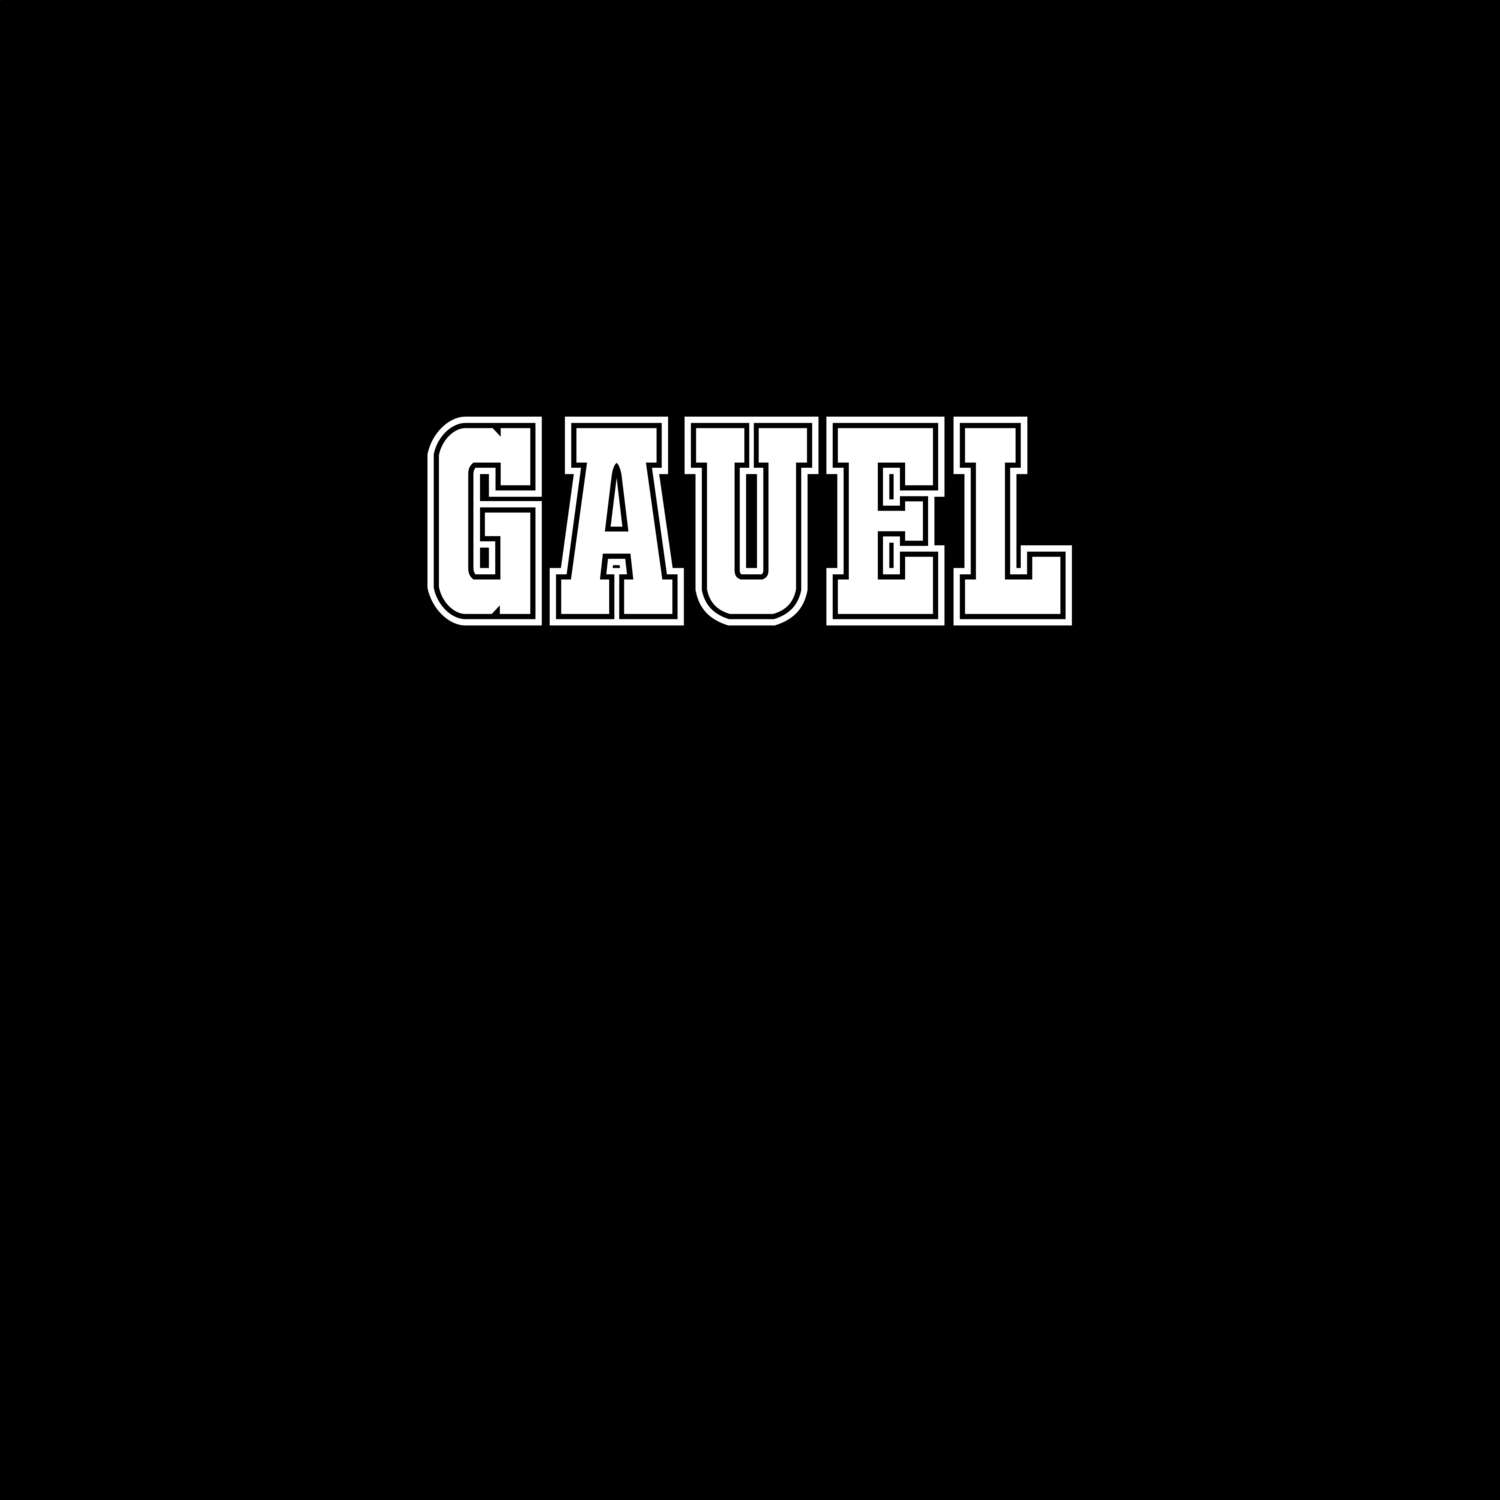 Gauel T-Shirt »Classic«